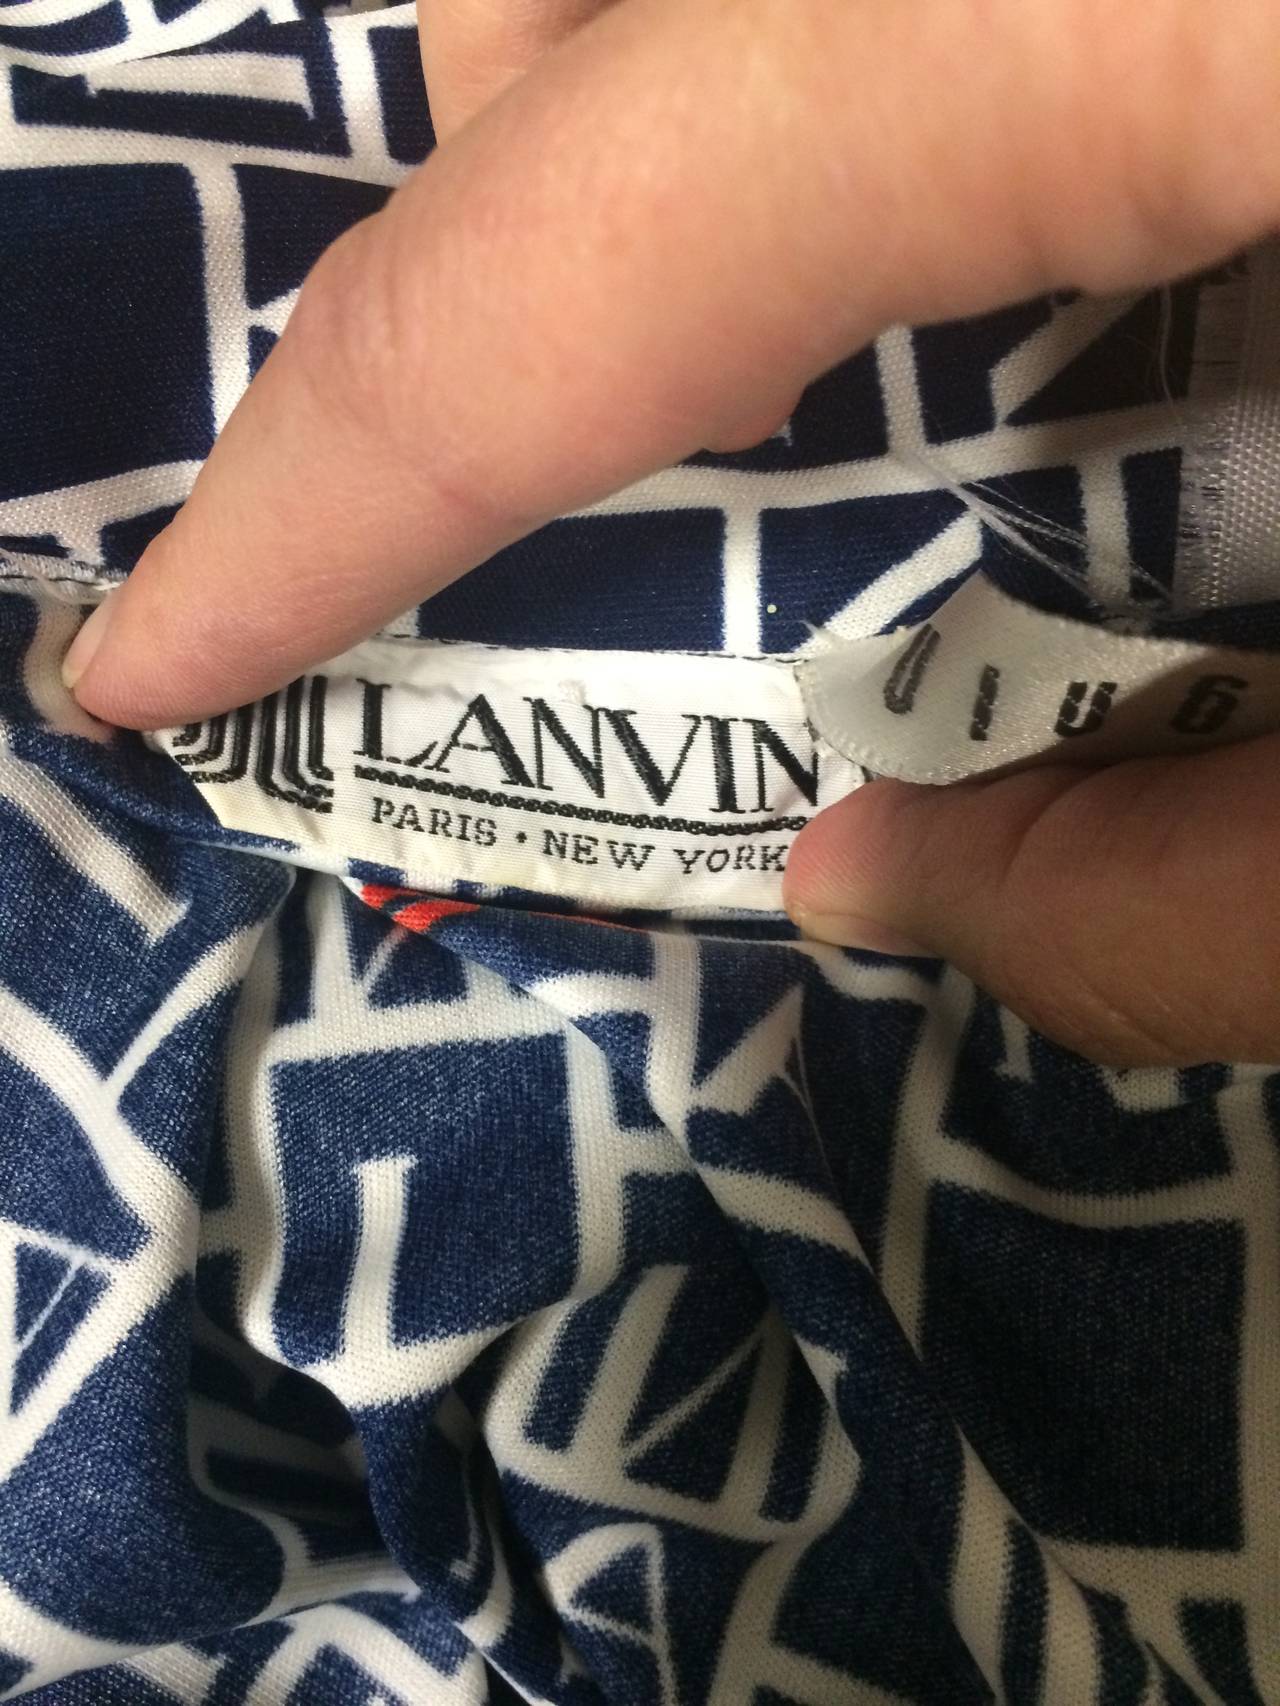 Lanvin Monogram Jersey Dress For Sale at 1stdibs